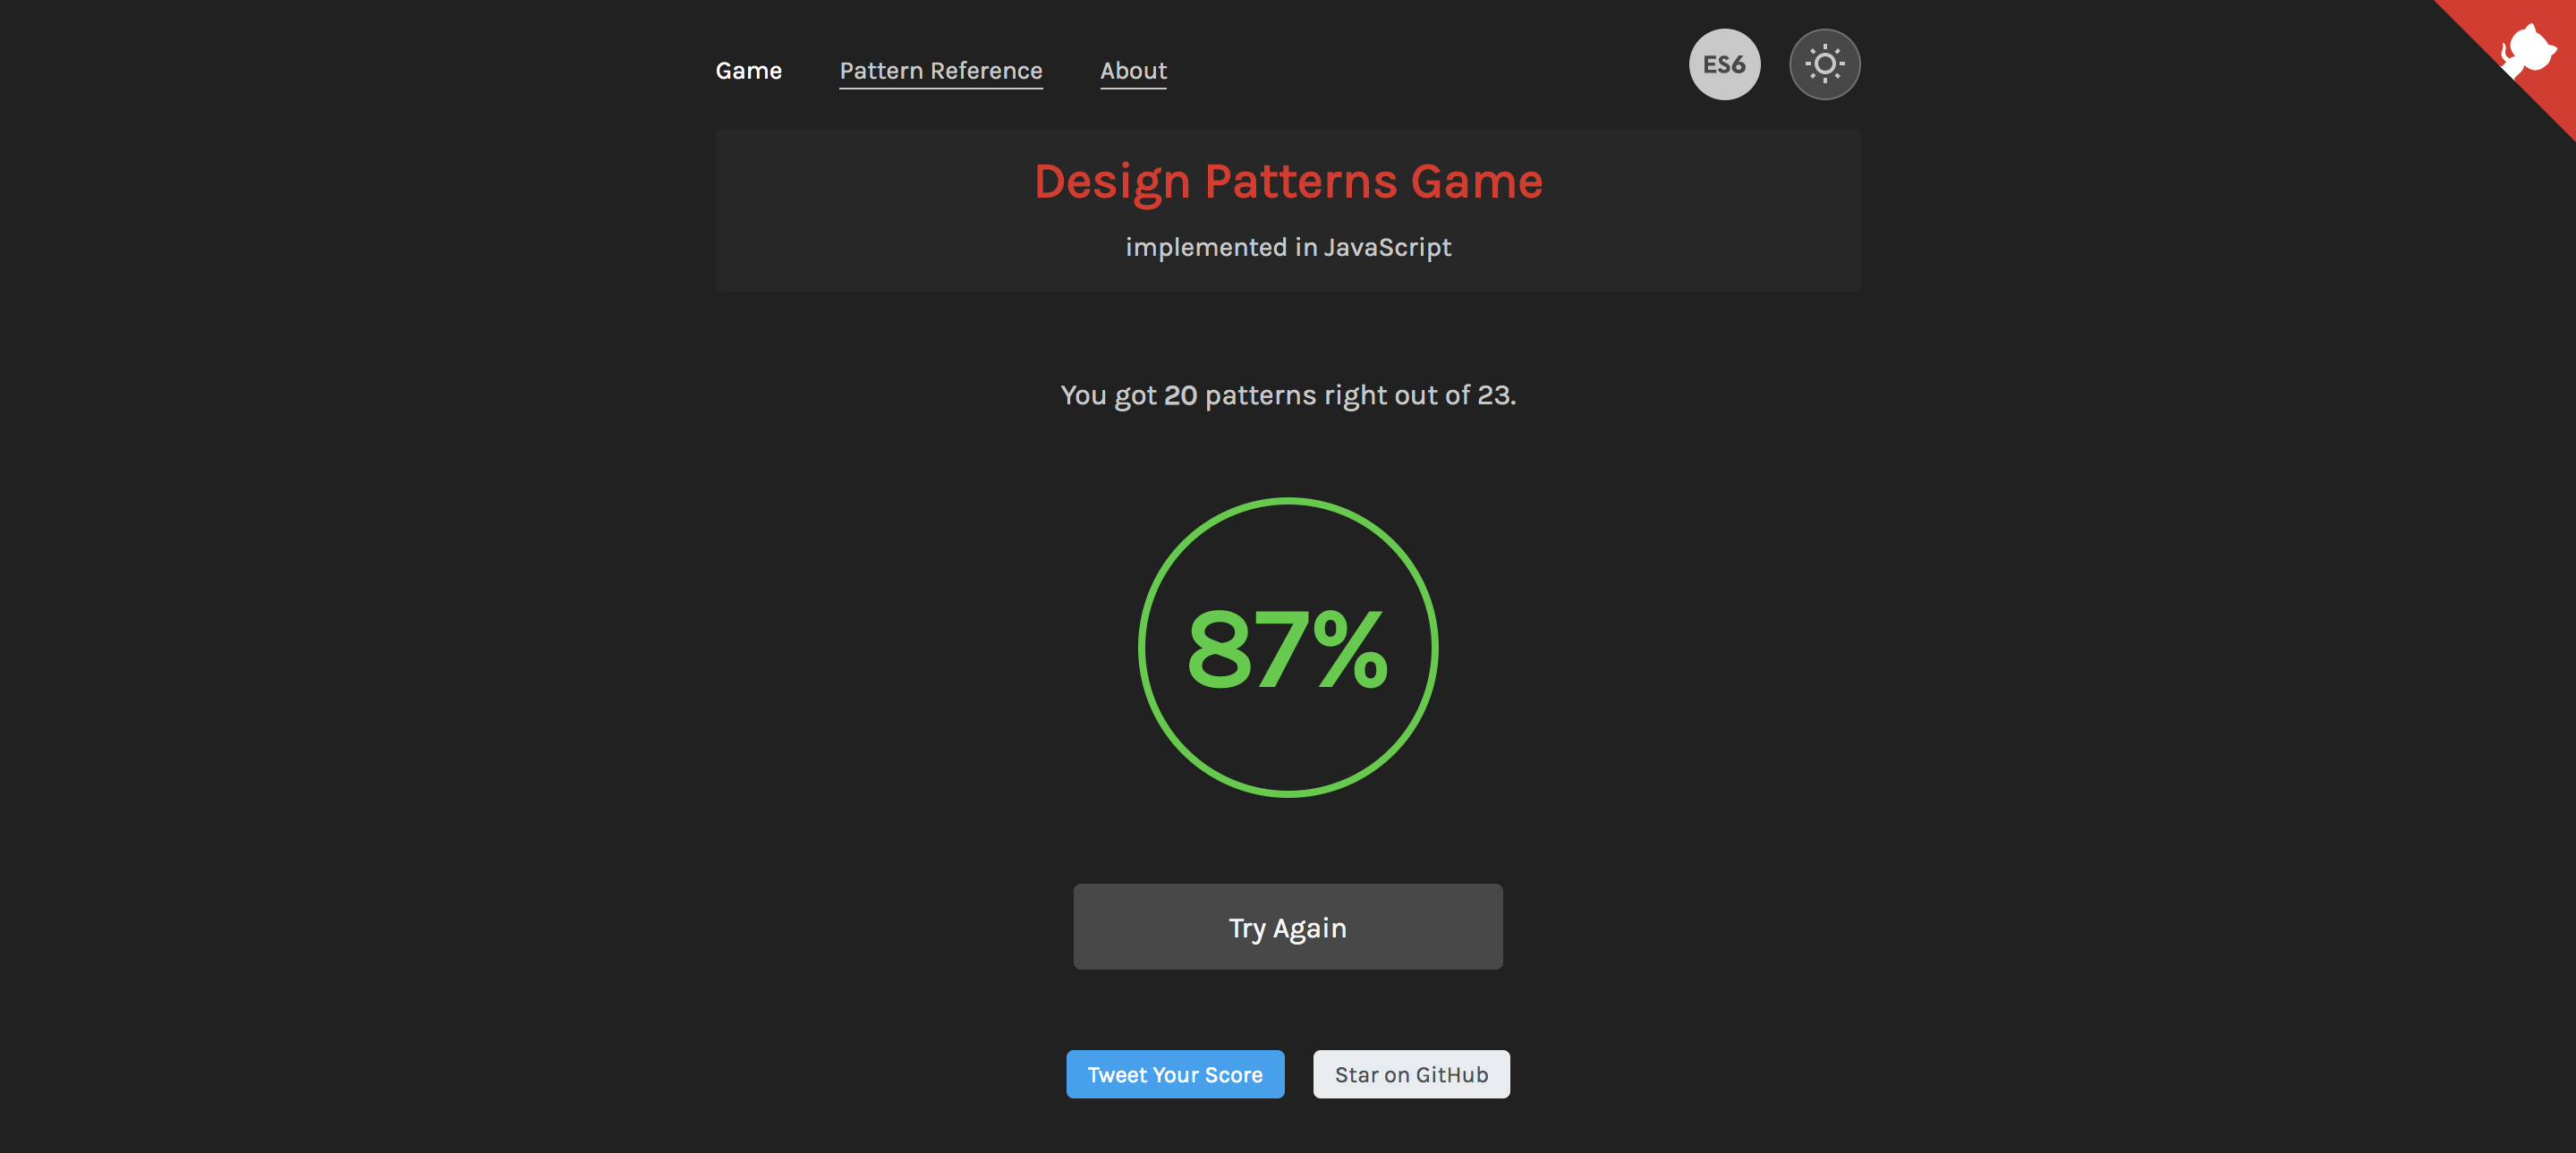 Design Patterns - game results screenshot